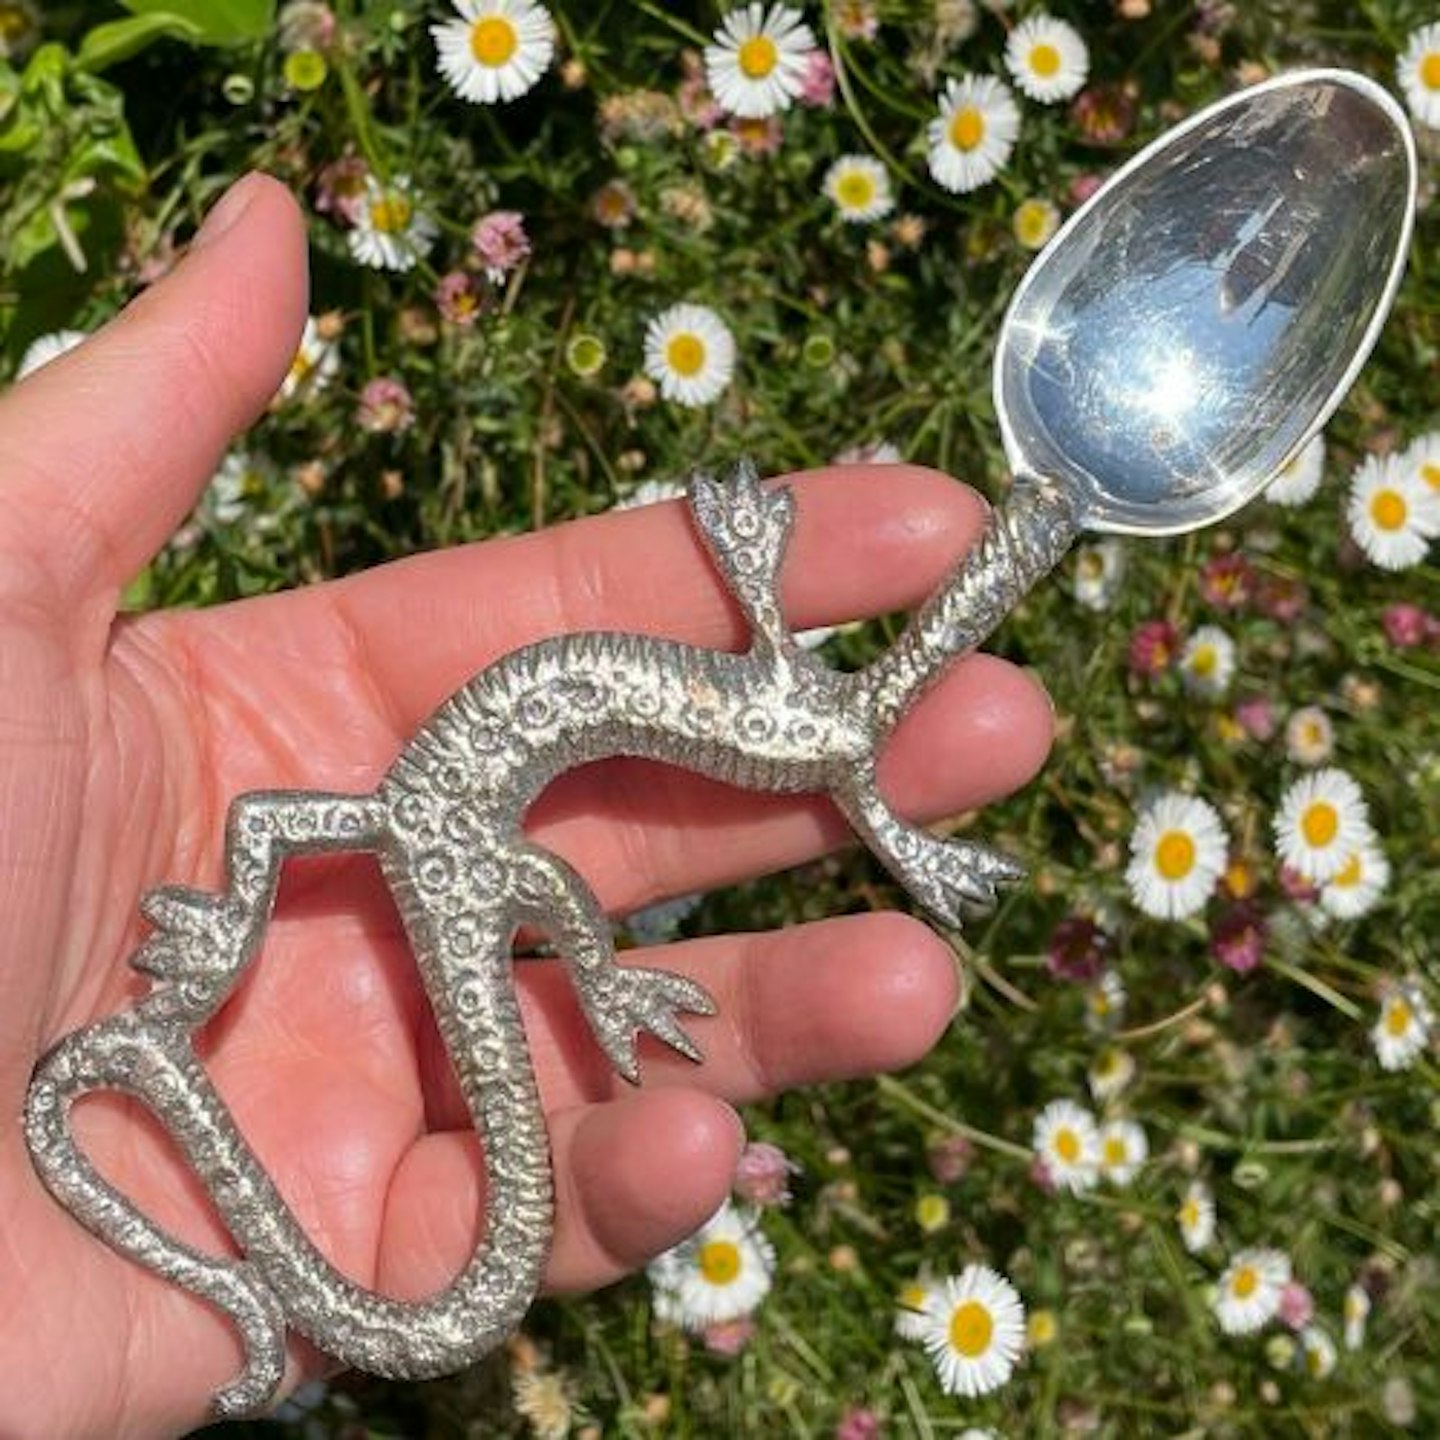 Vintage Lizard Ritual-Spell casting Spoon